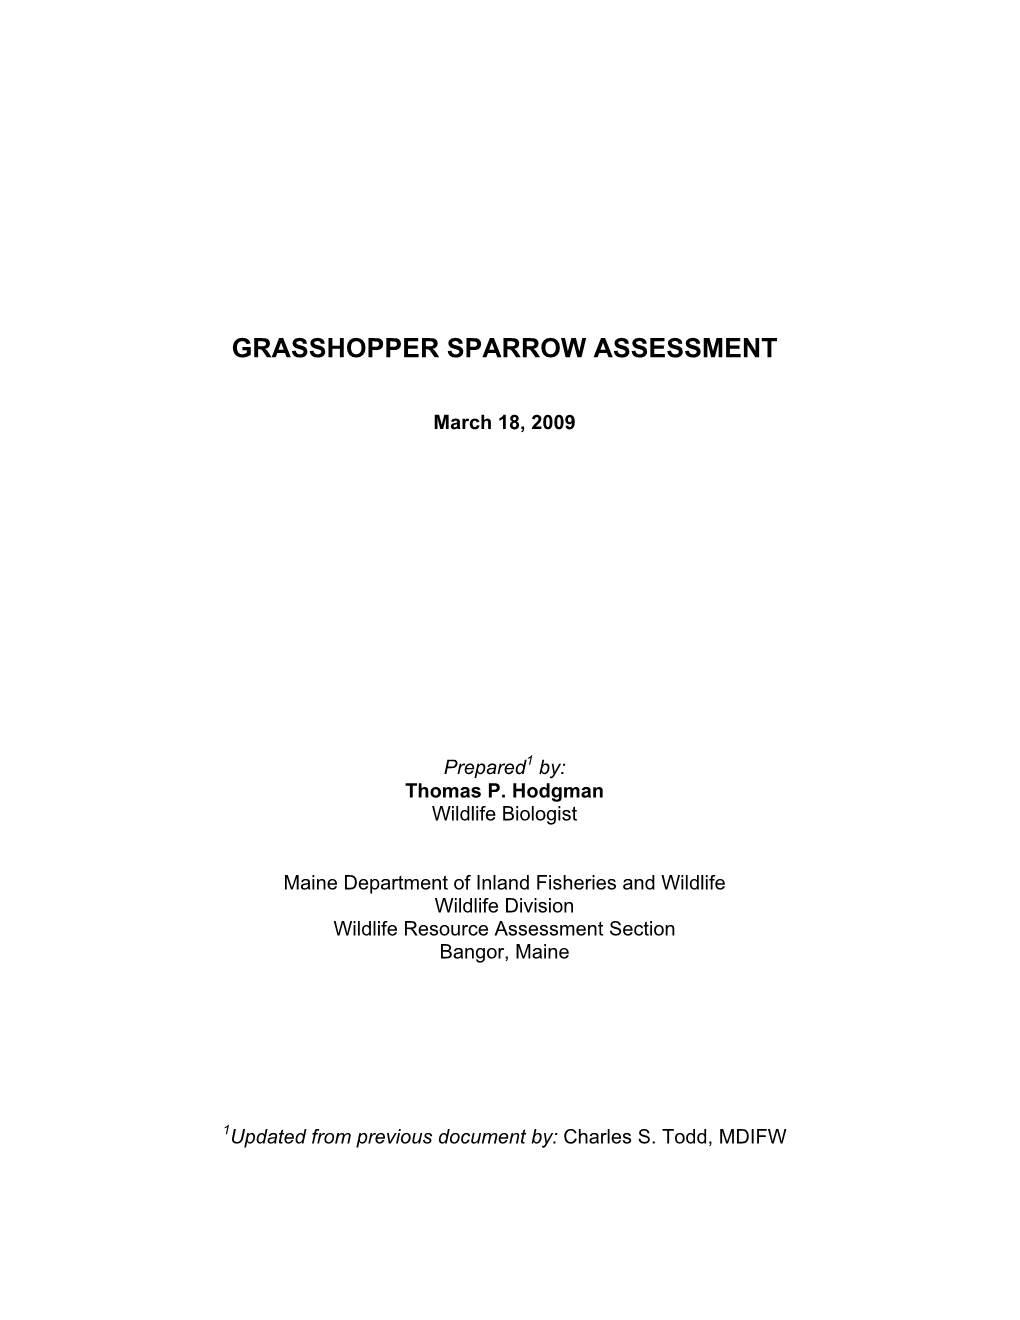 Grasshopper Sparrow Species Assessment